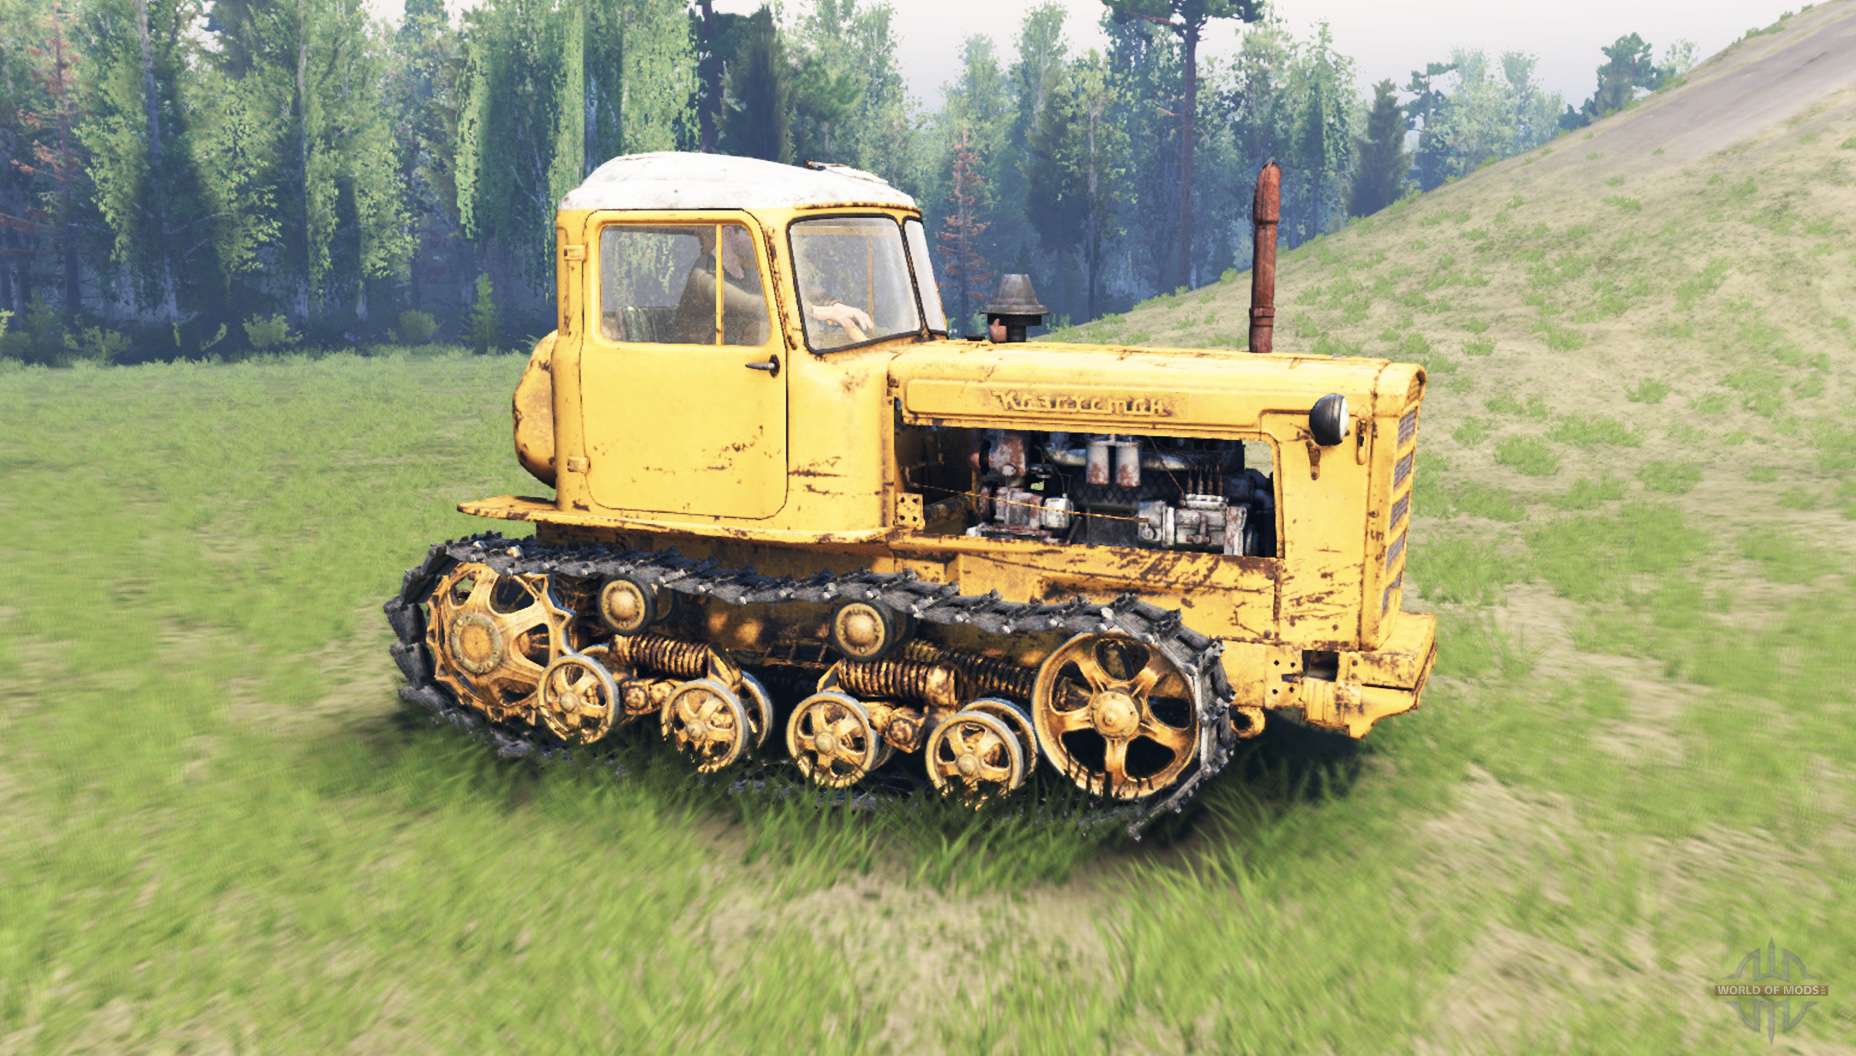 Трактора дт купить б у. Трактор ДТ 75 желтый. Трактор гусеничный ДТ-75т. ДТ-75 трактор гусеничный. ДТ-75 трактор гусеничный желтый.